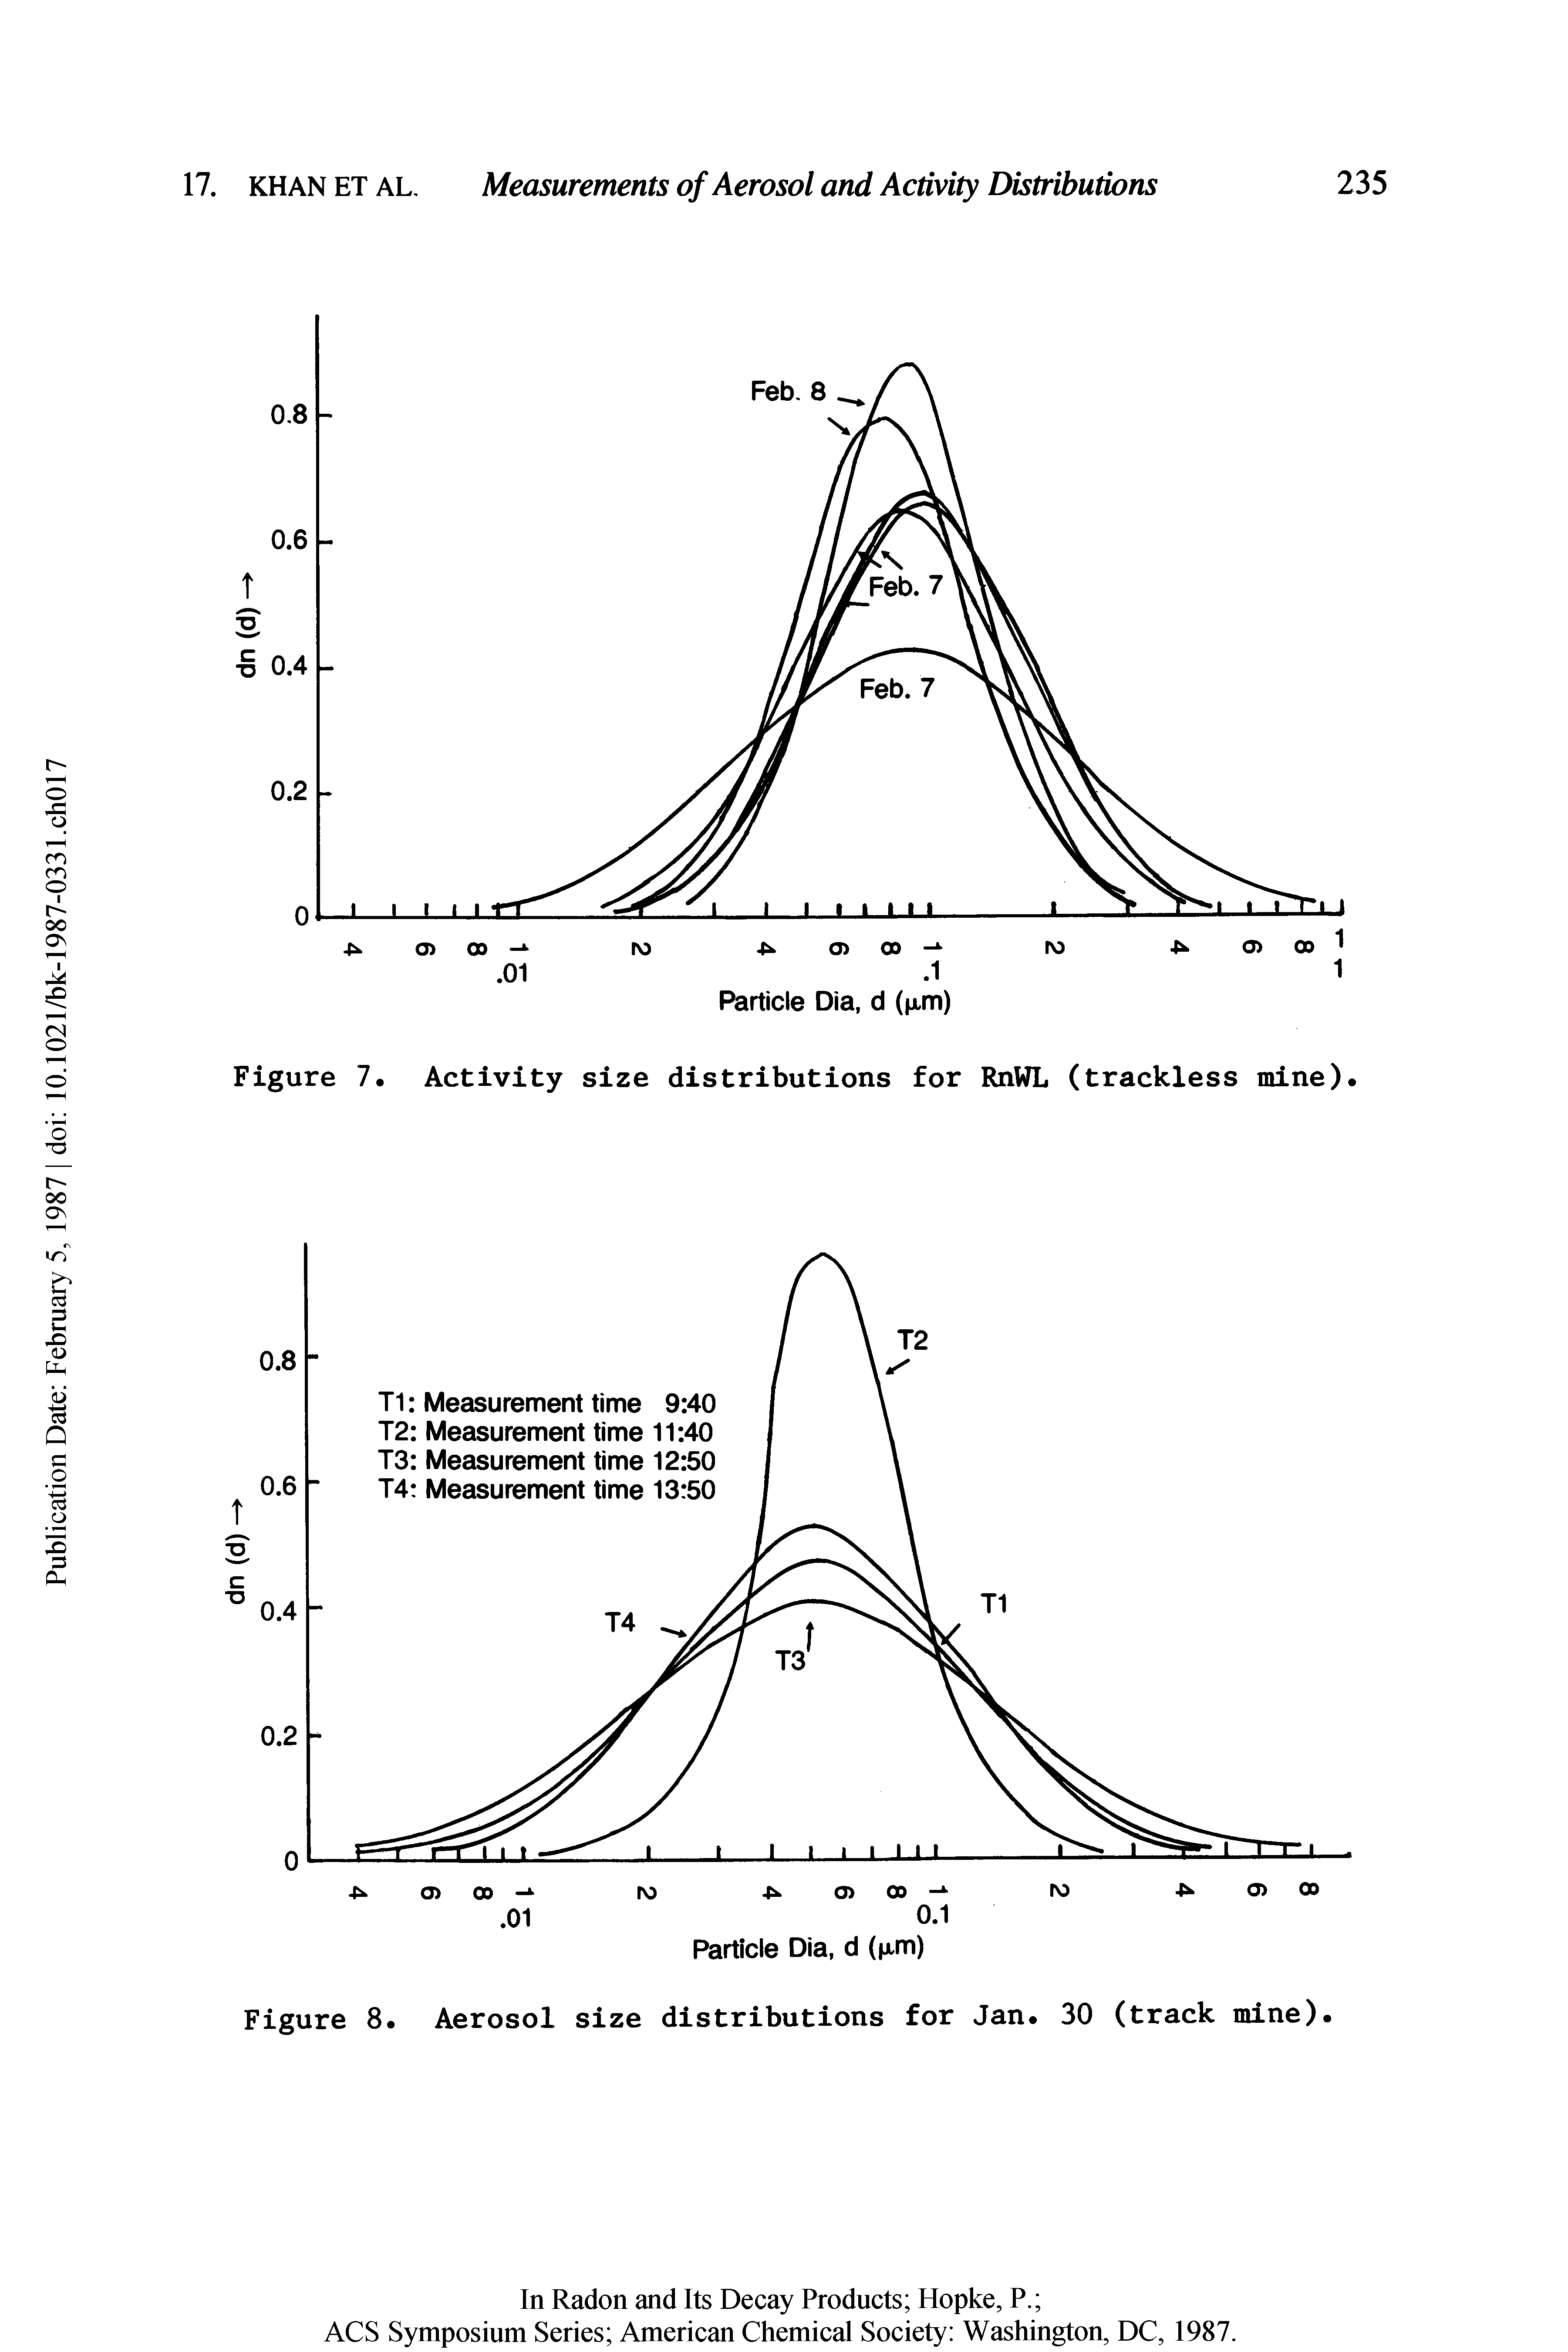 Figure 8. Aerosol size distributions for Jan. 30 (track mine).